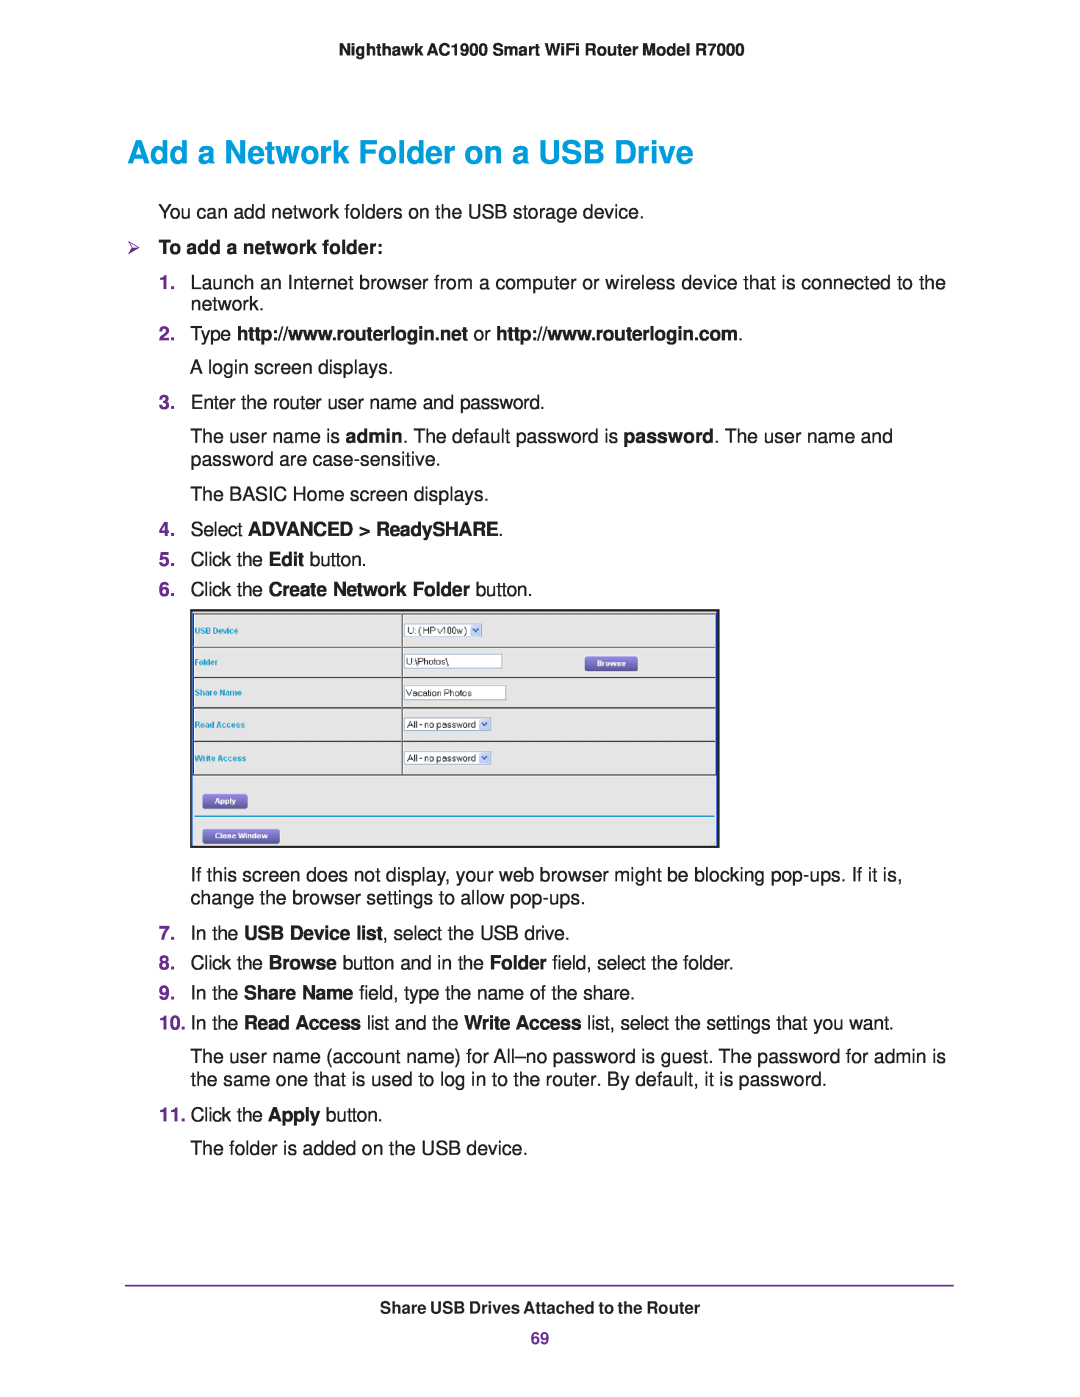 NETGEAR R7000 user manual Add a Network Folder on a USB Drive,  To add a network folder, Select ADVANCED ReadySHARE 